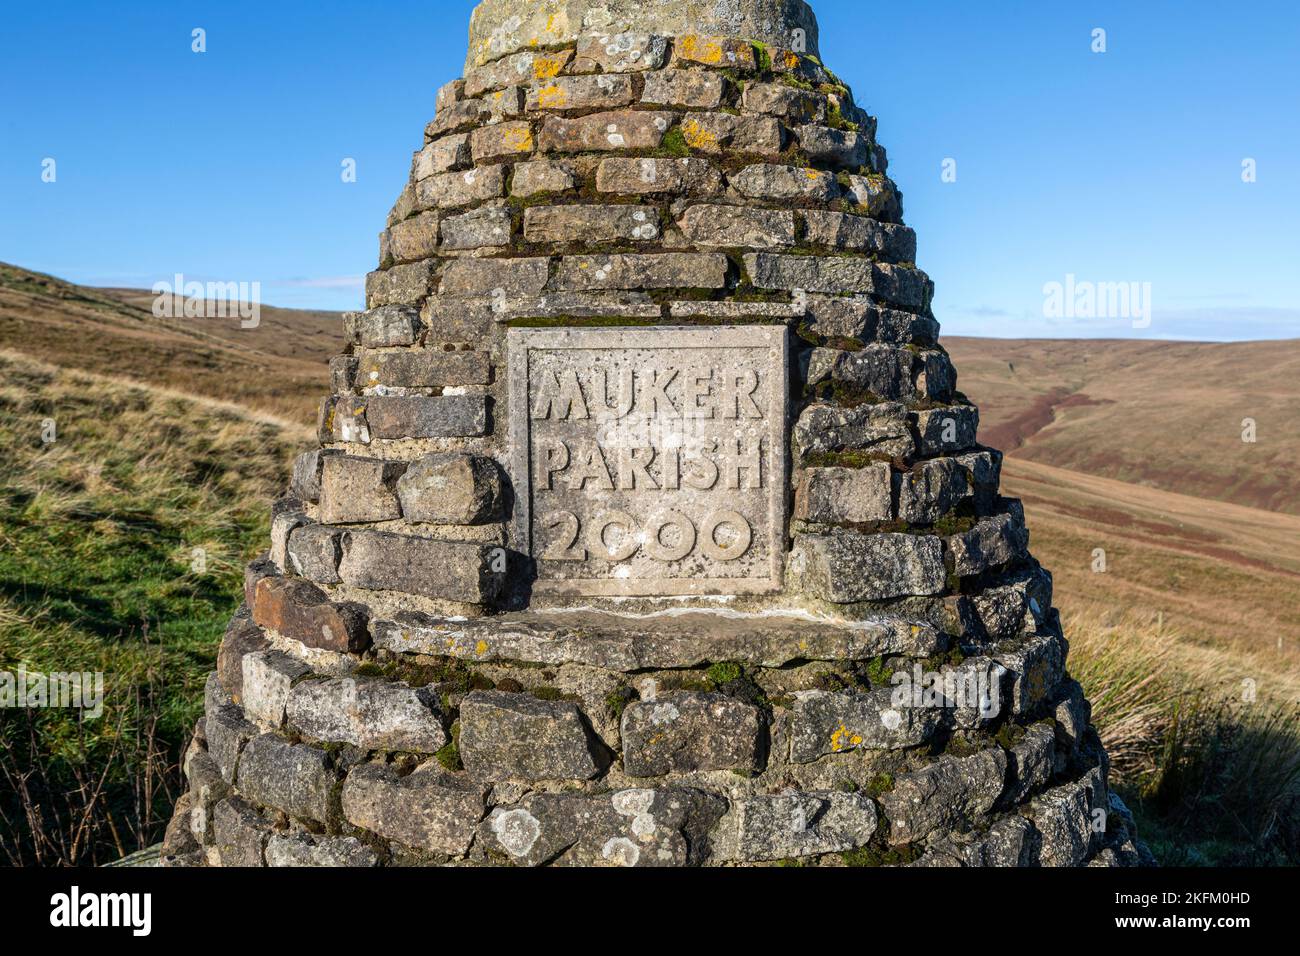 The Millennium boundary marker, Muker Parish, Buttertubs Pass Road, Swaledale, Yorkshire Dales National Park, Yorkshire, England Stock Photo